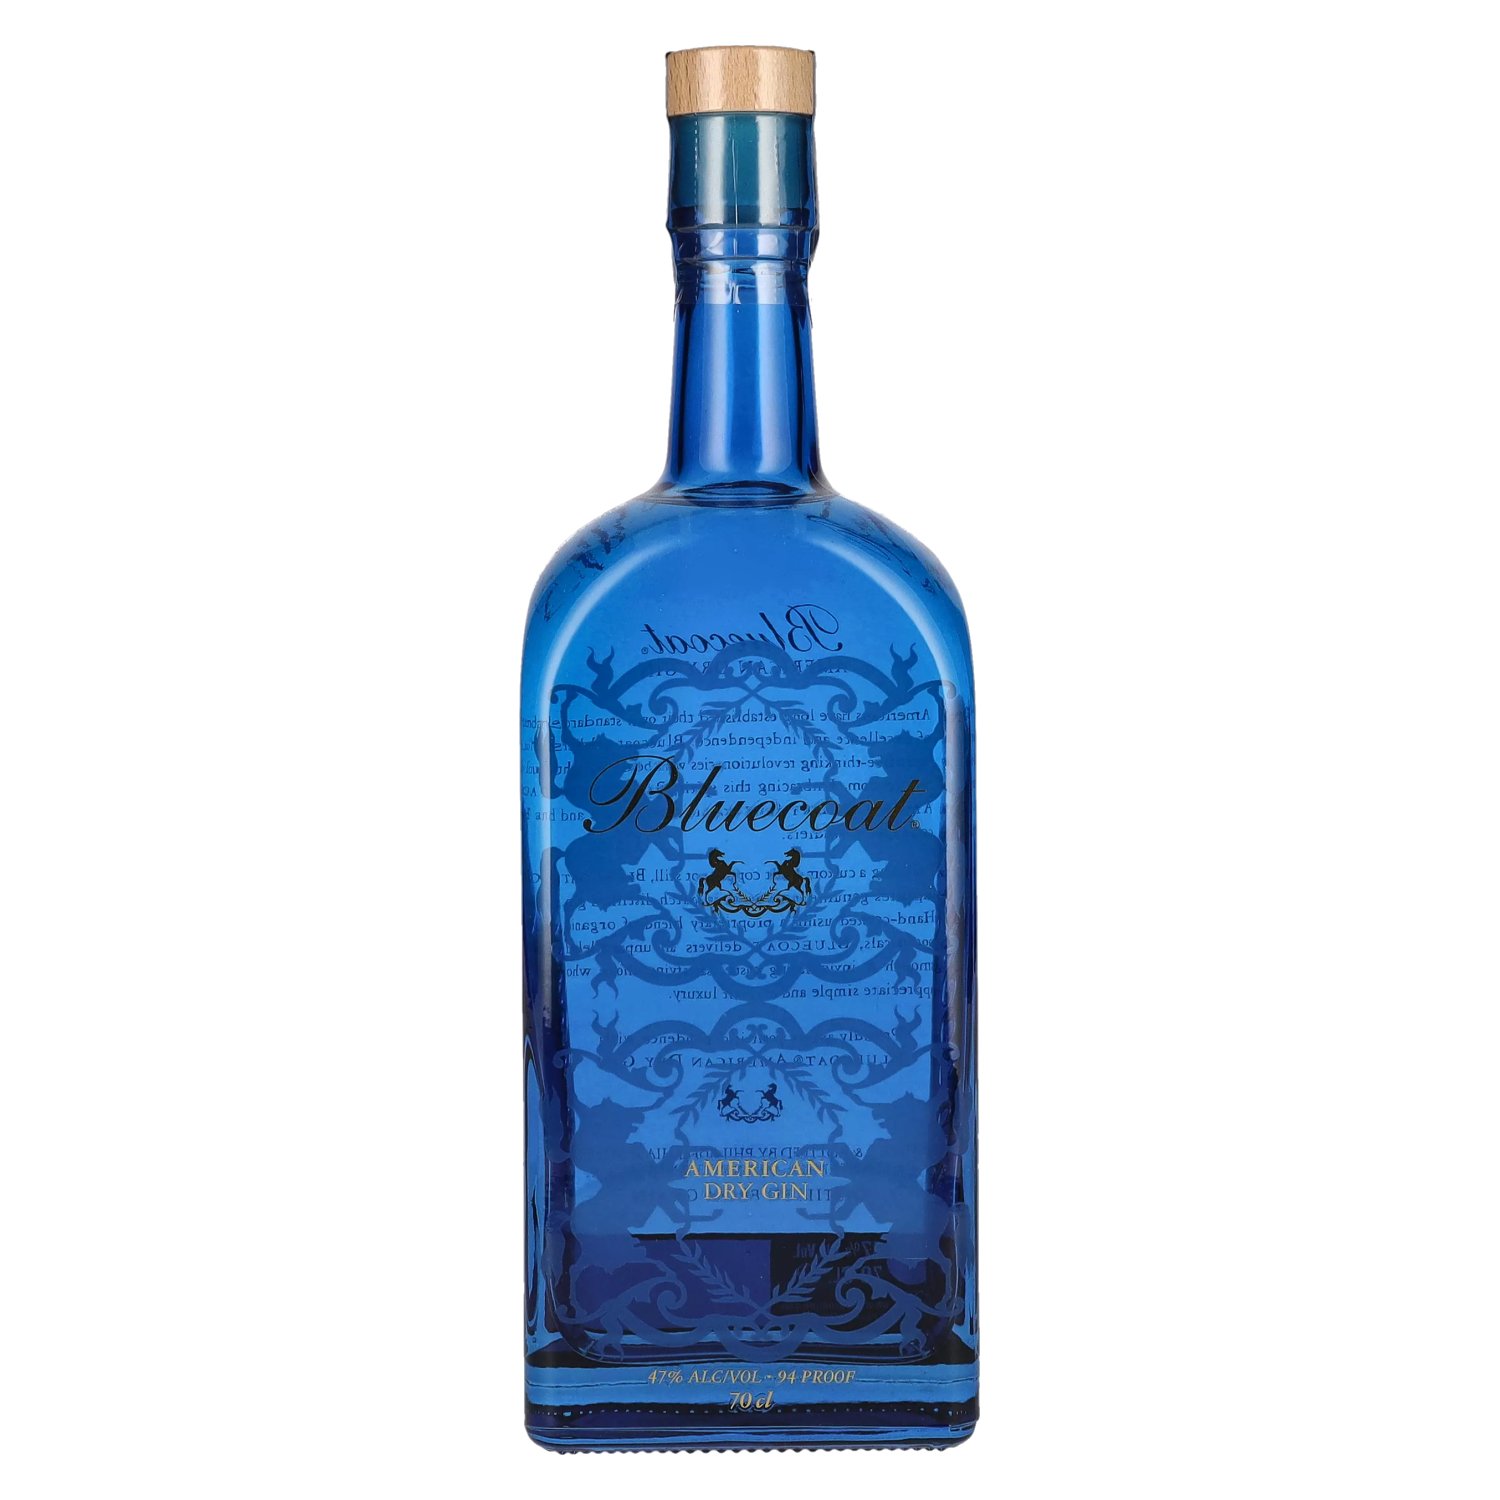 Bluecoat gin 47% 0,7L